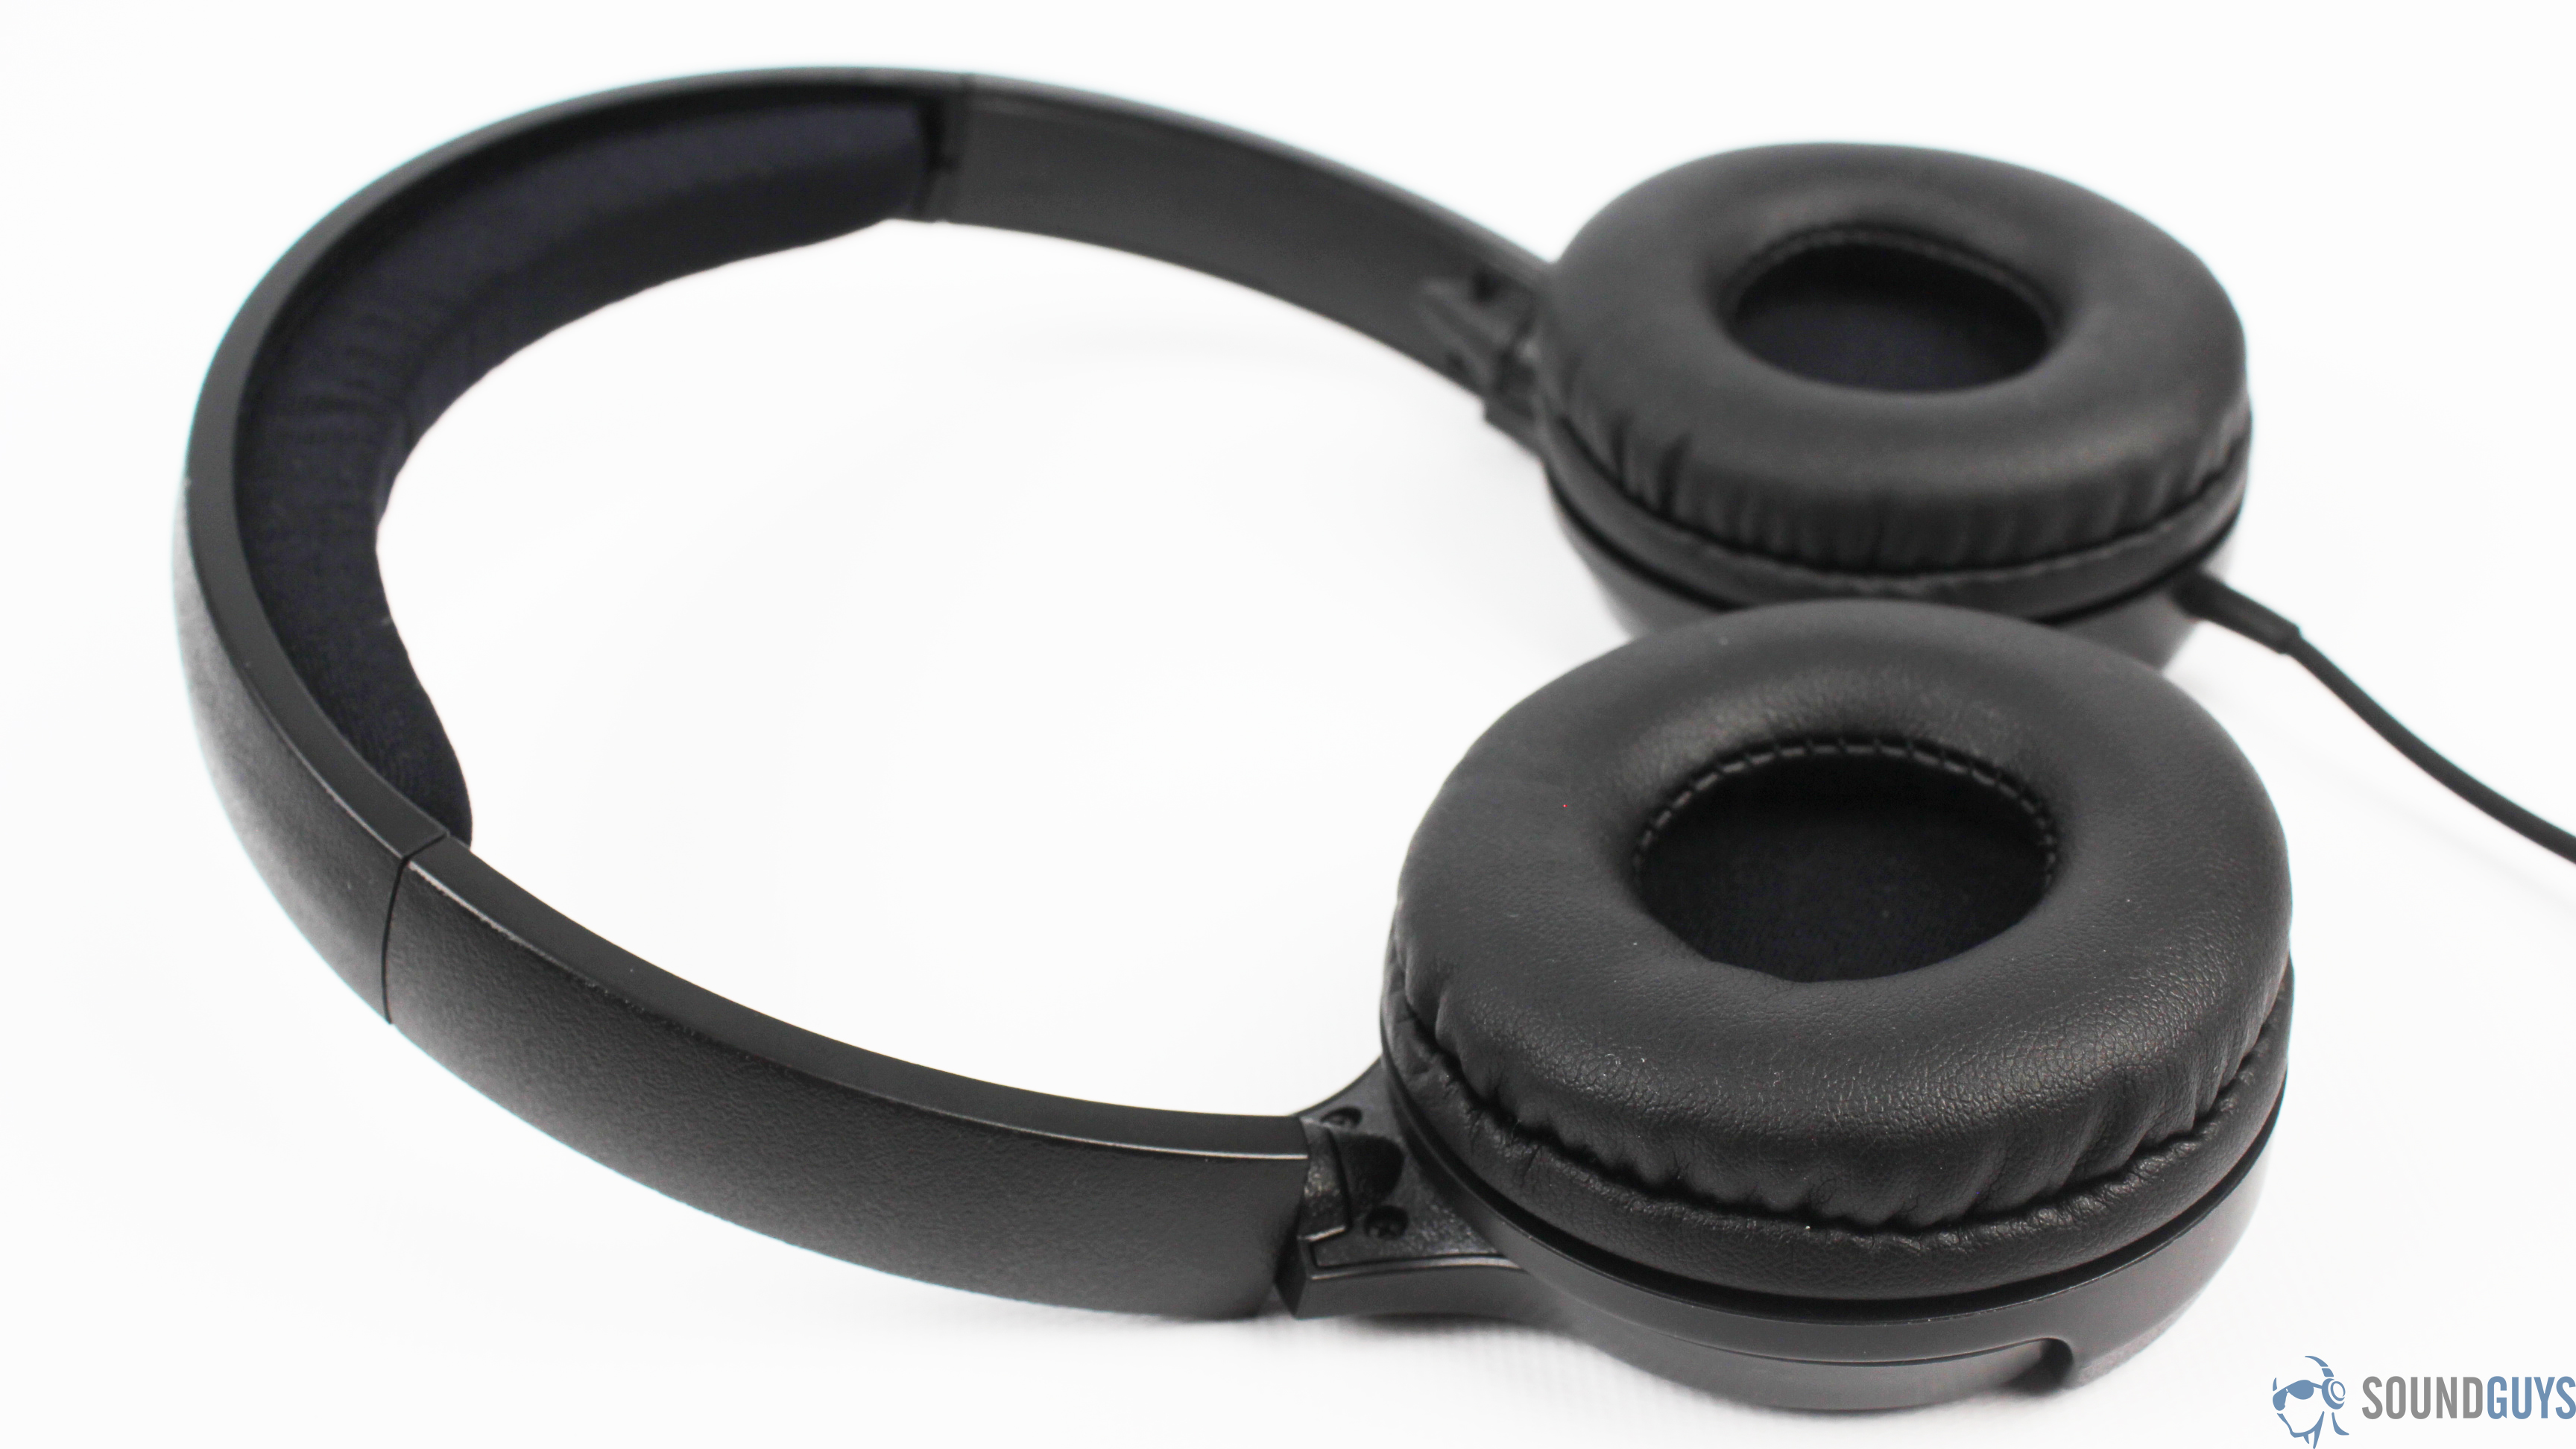 The Monoprice Hi-Fi On-Ear headphones with the ear pads facing upward.